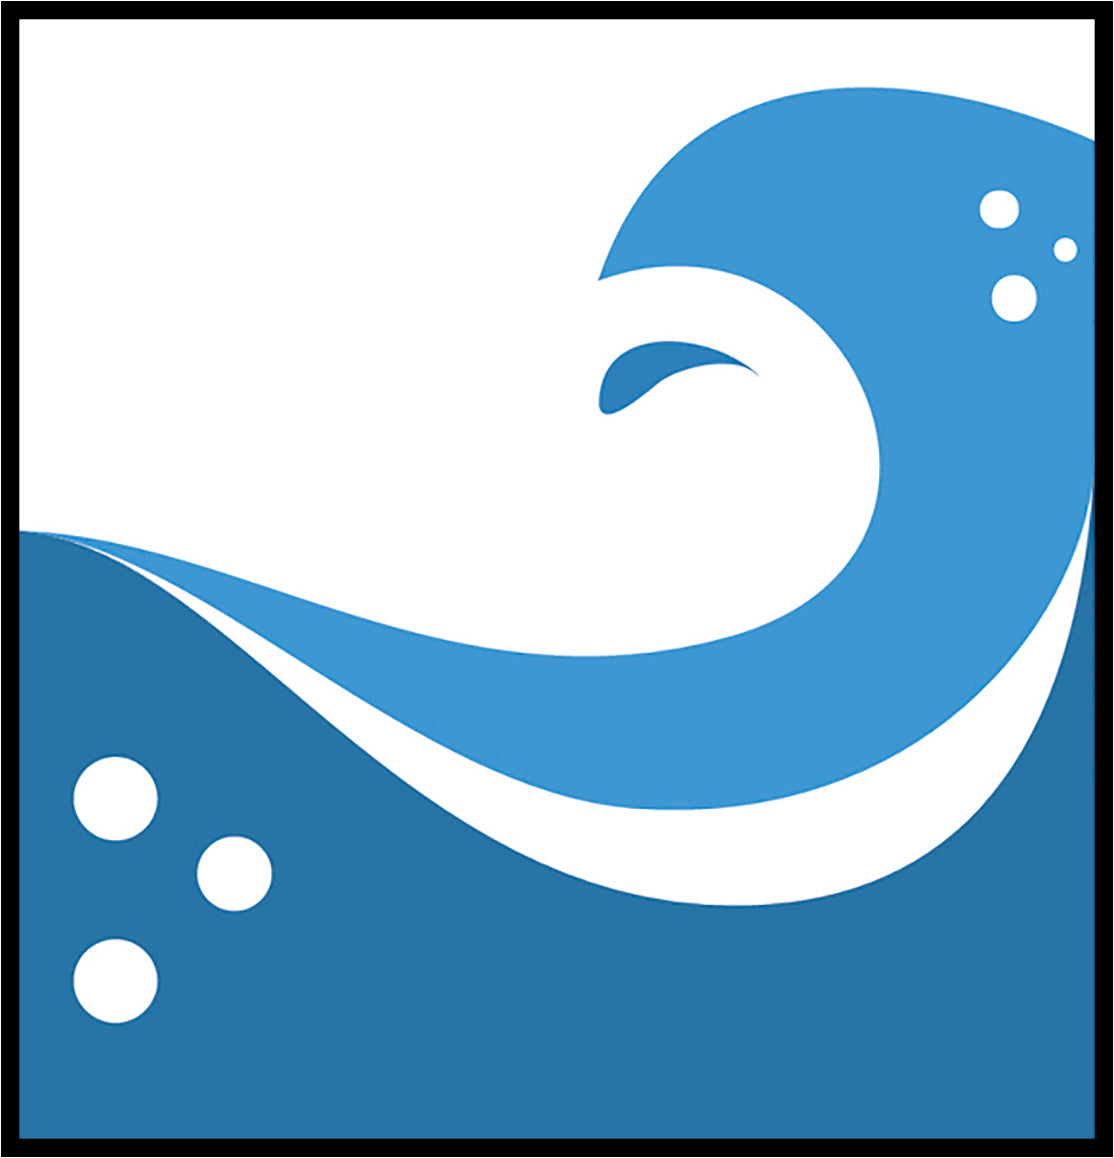 Cool Simple Ocean Sea Waves Cartoon Logo Icon #1 Border Around Image As Shown Vinyl Sticker